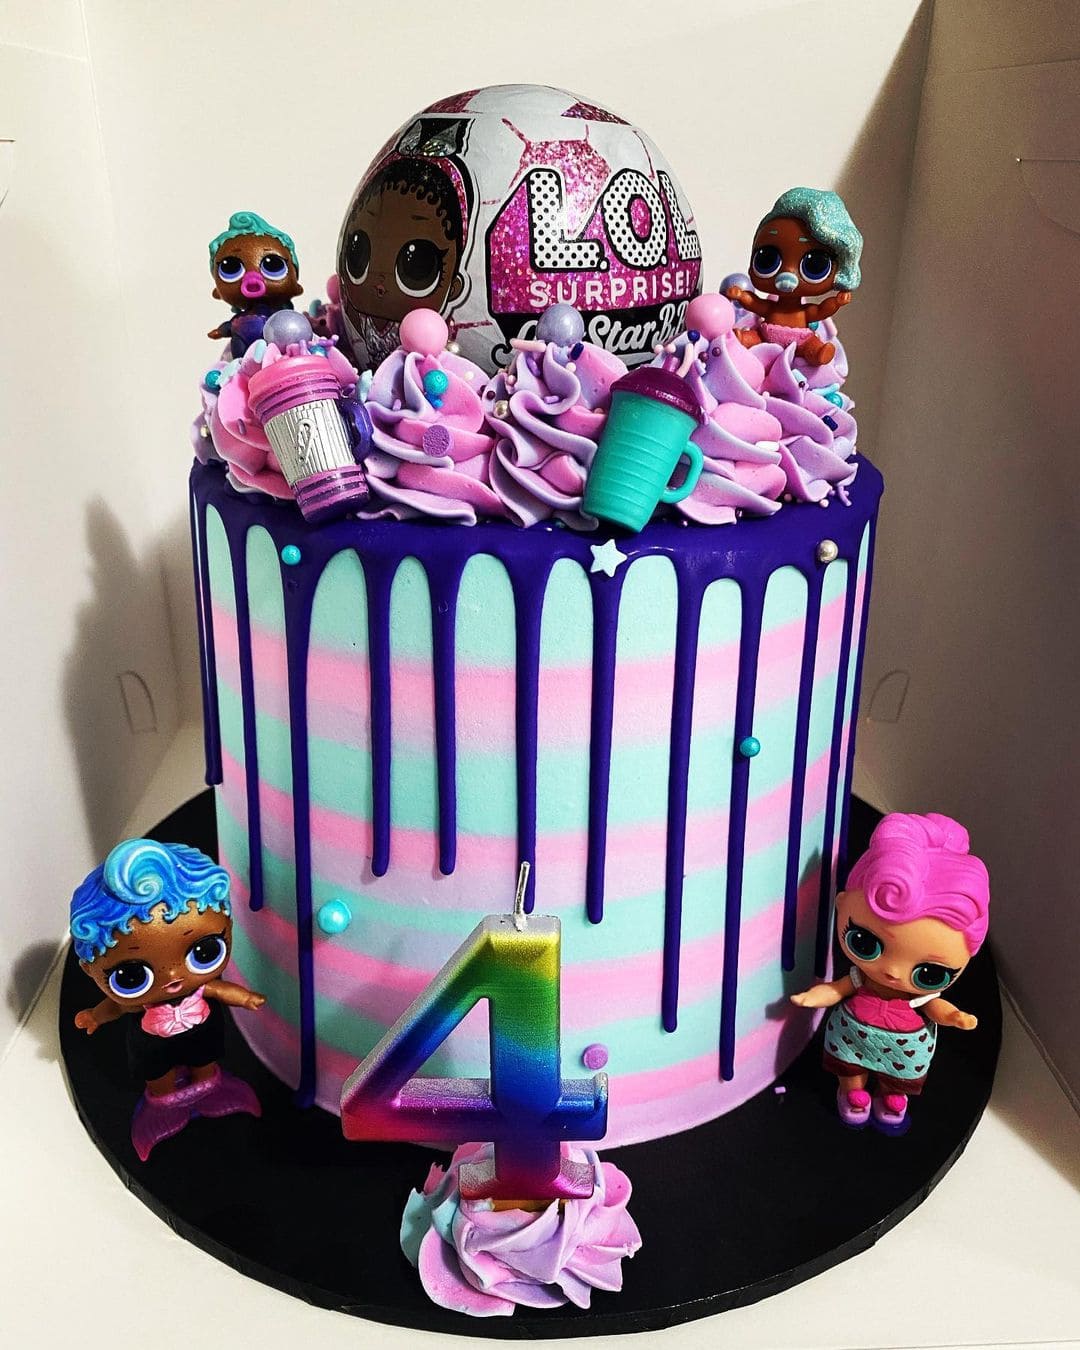 Pastel de muñecas LOL Surprise - Imágenes e ideas de cumpleaños